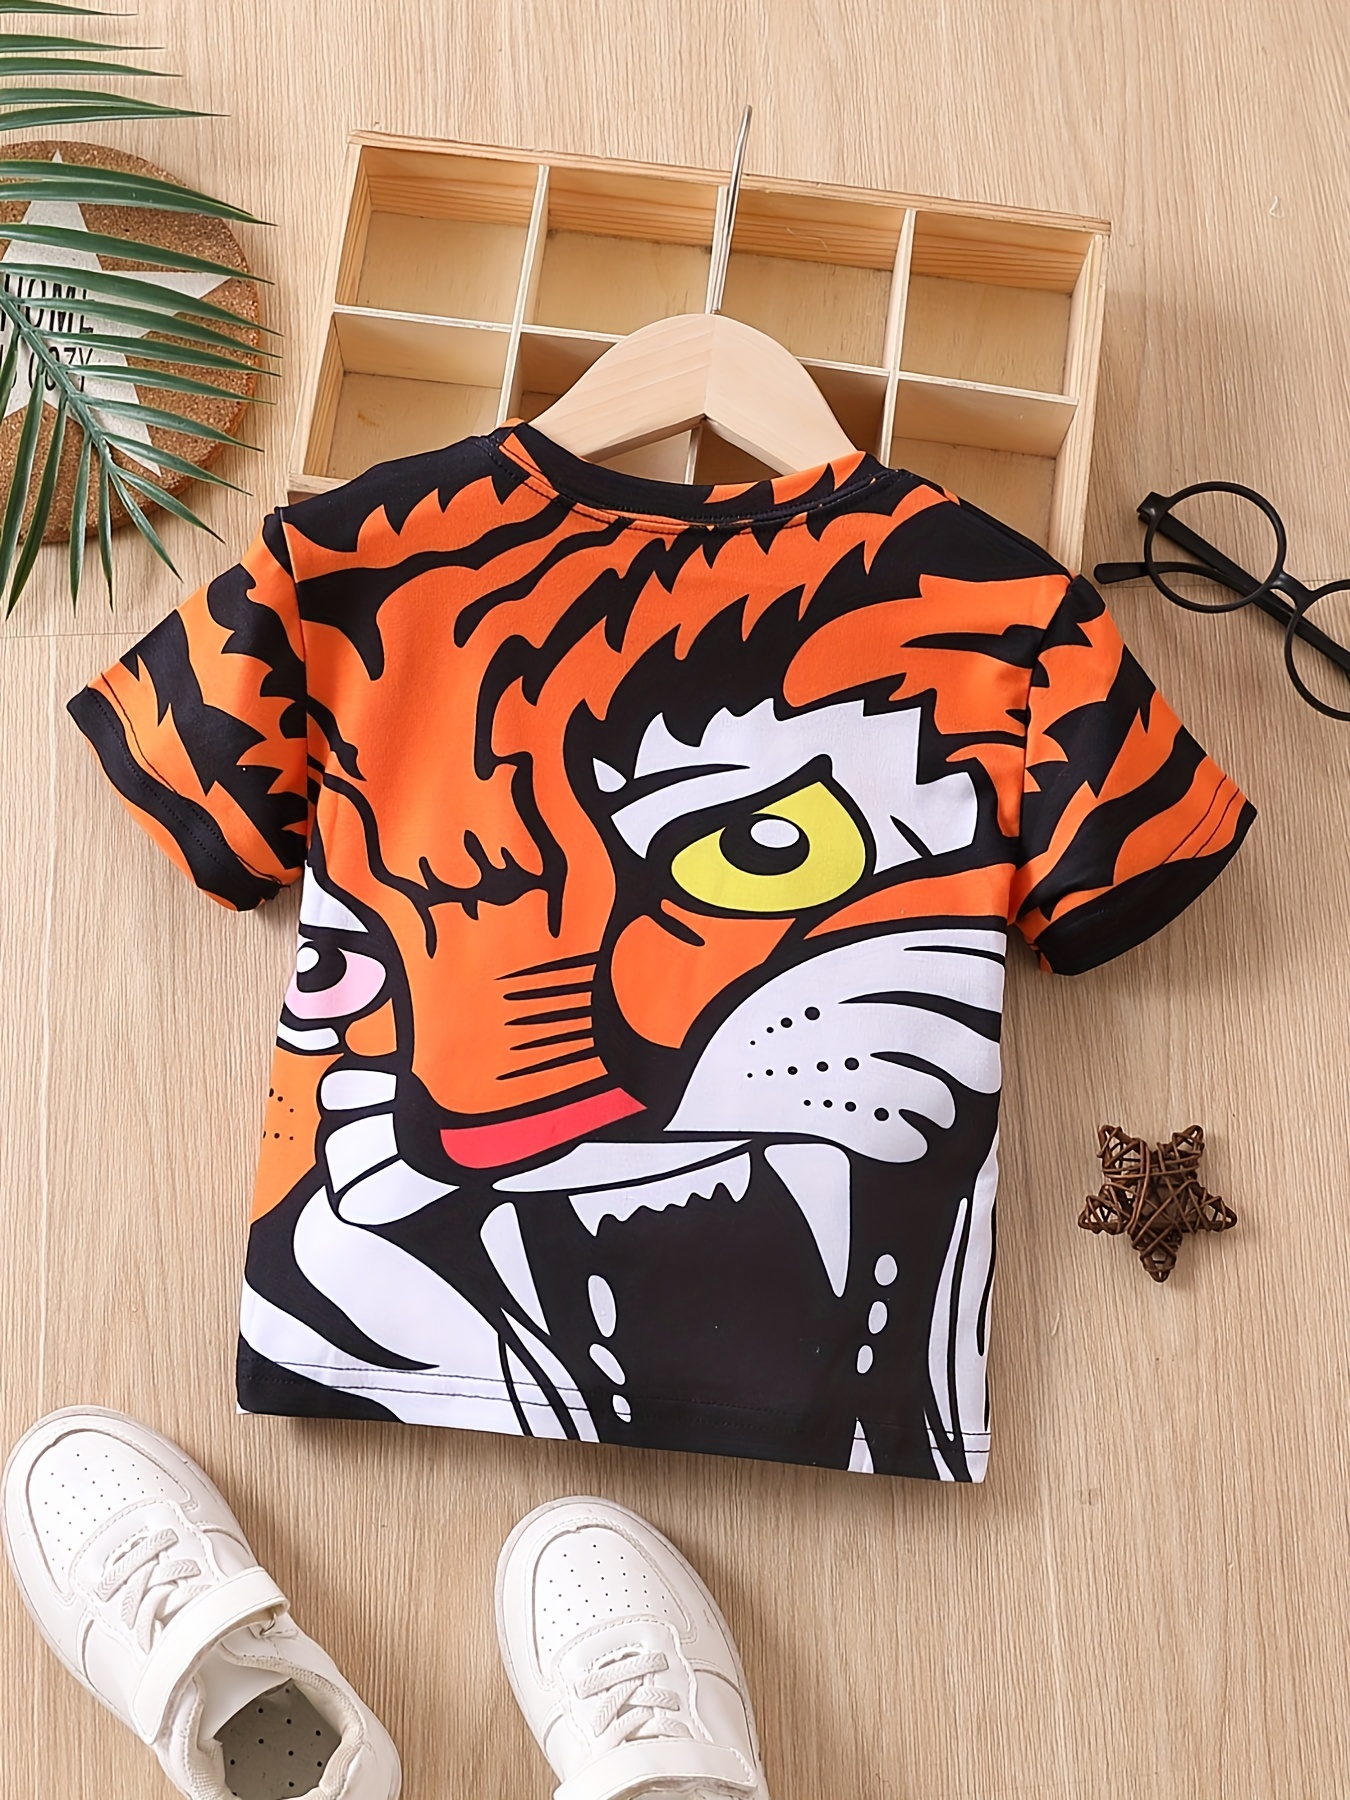 Tiger Palm T-Shirt